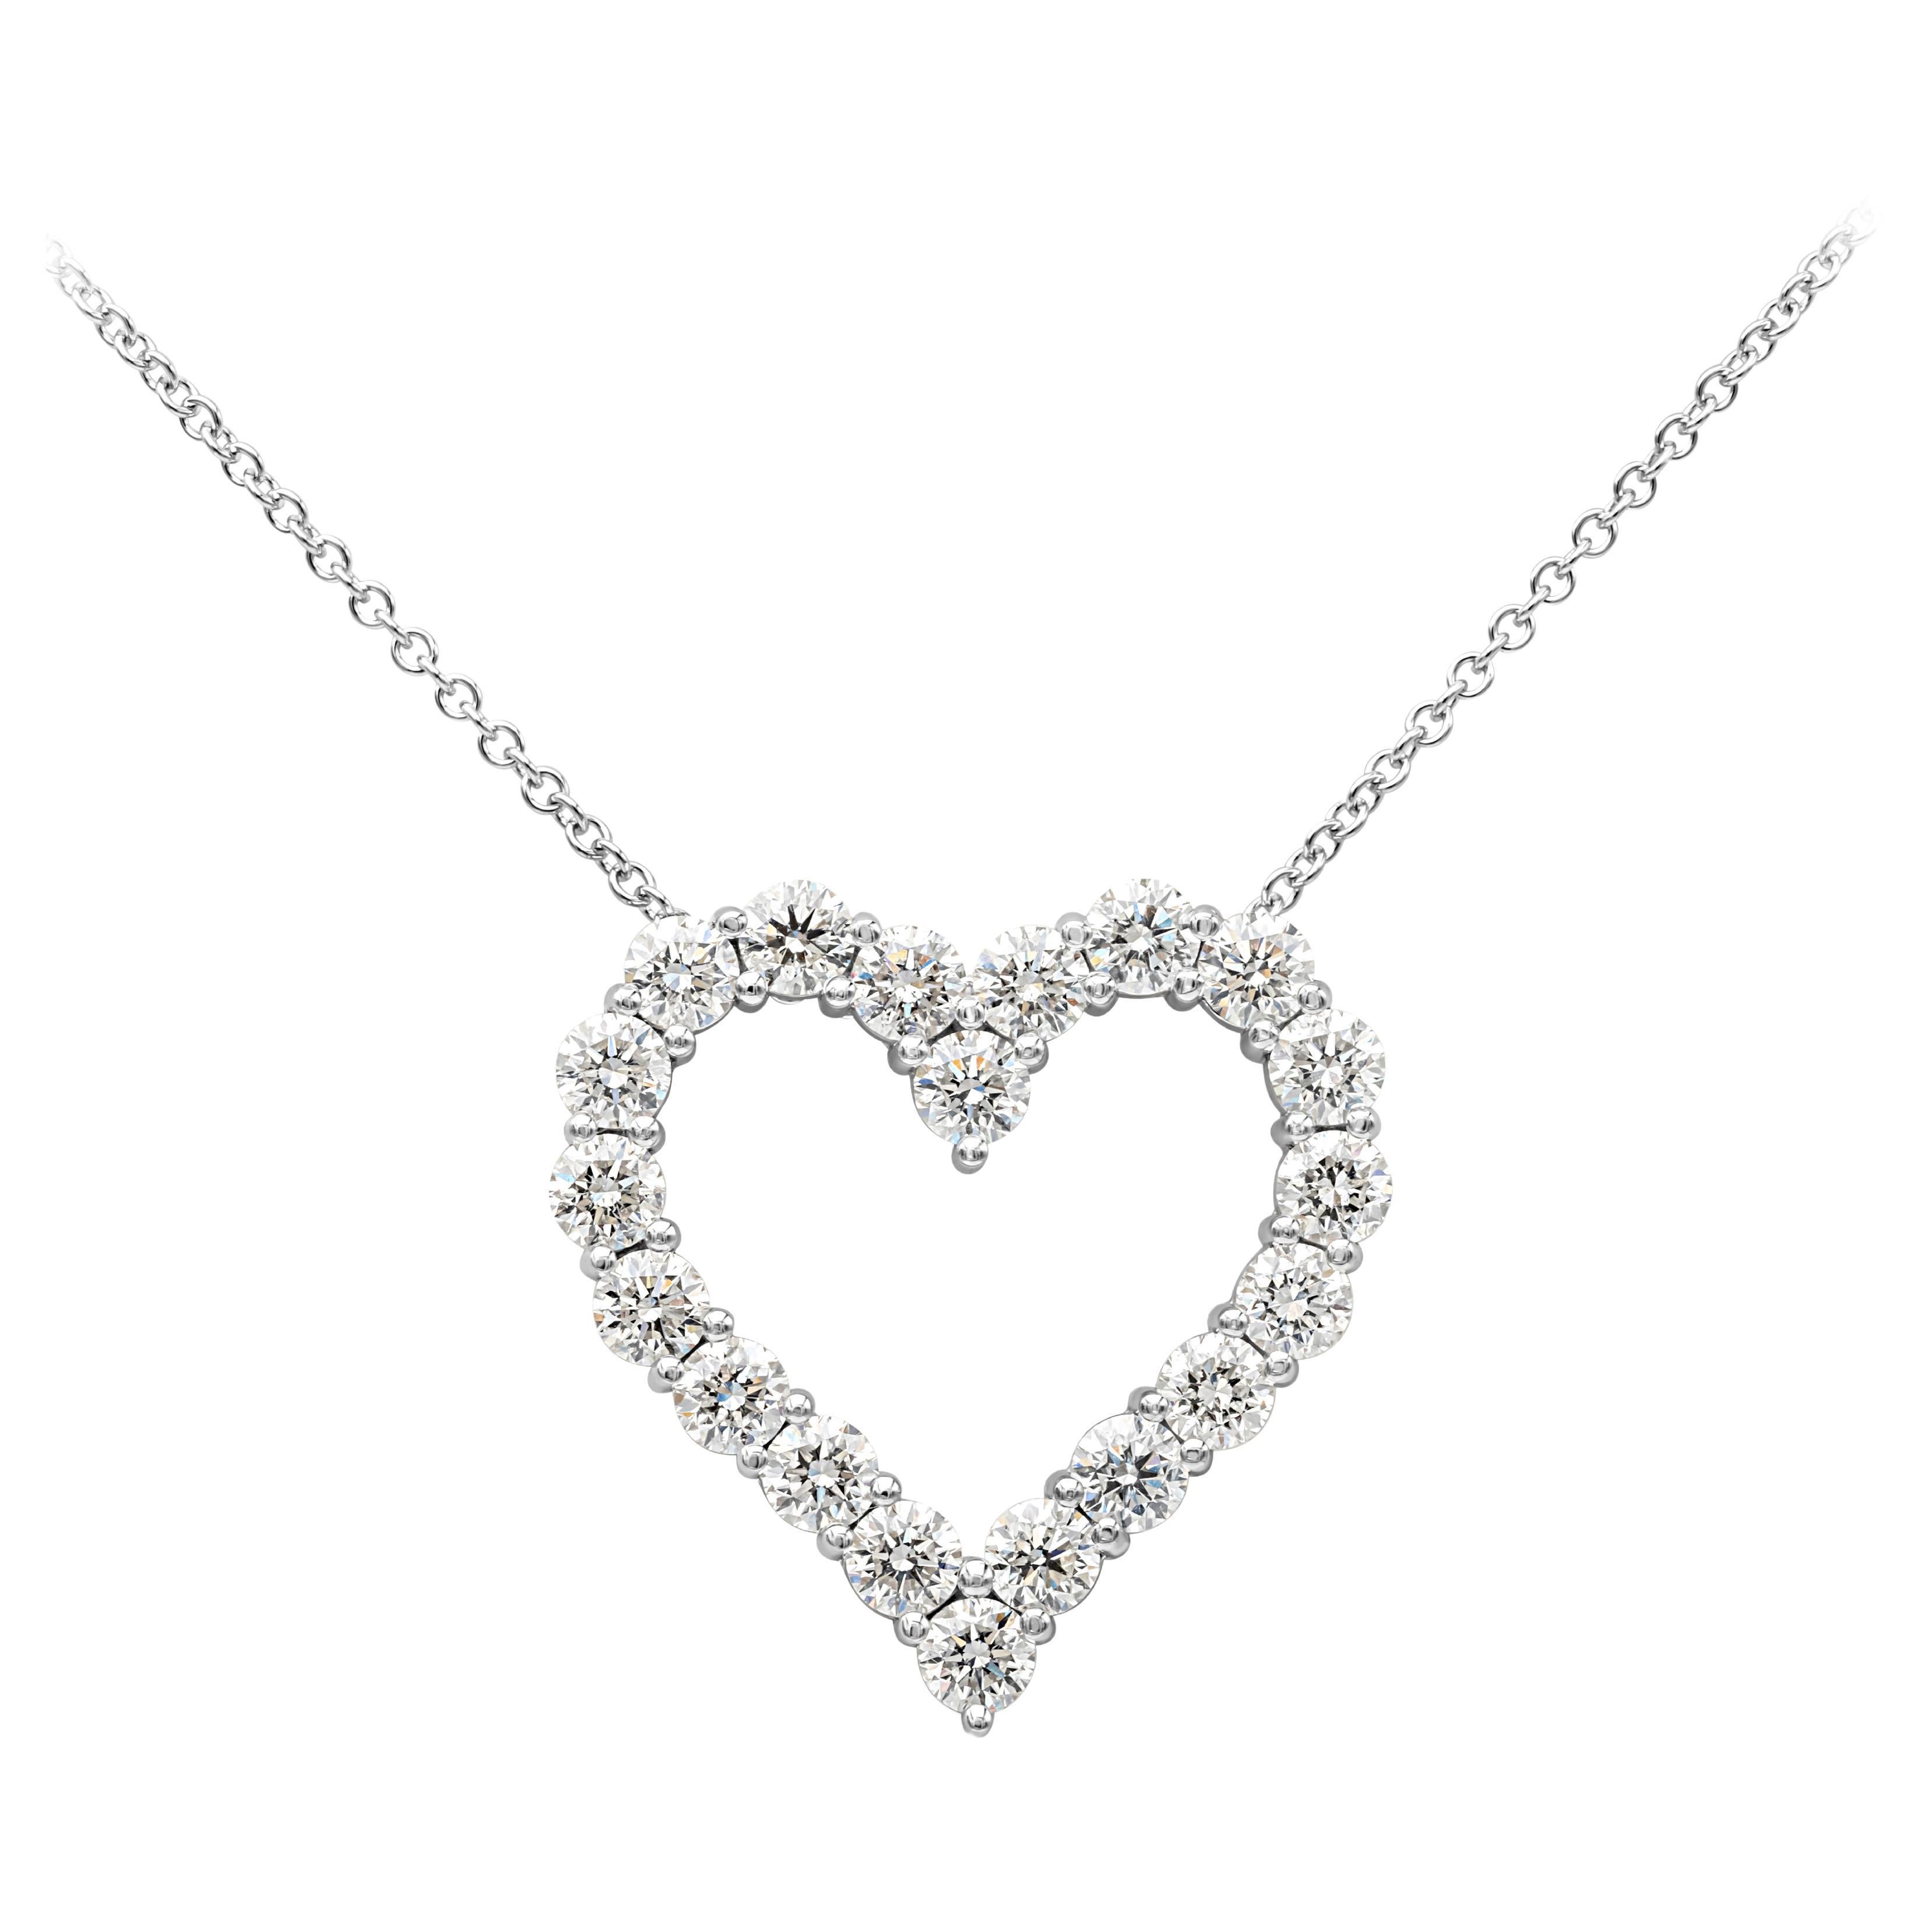 4.44 Carats Total Brilliant Round Diamond Open-Work Heart Pendant Necklace